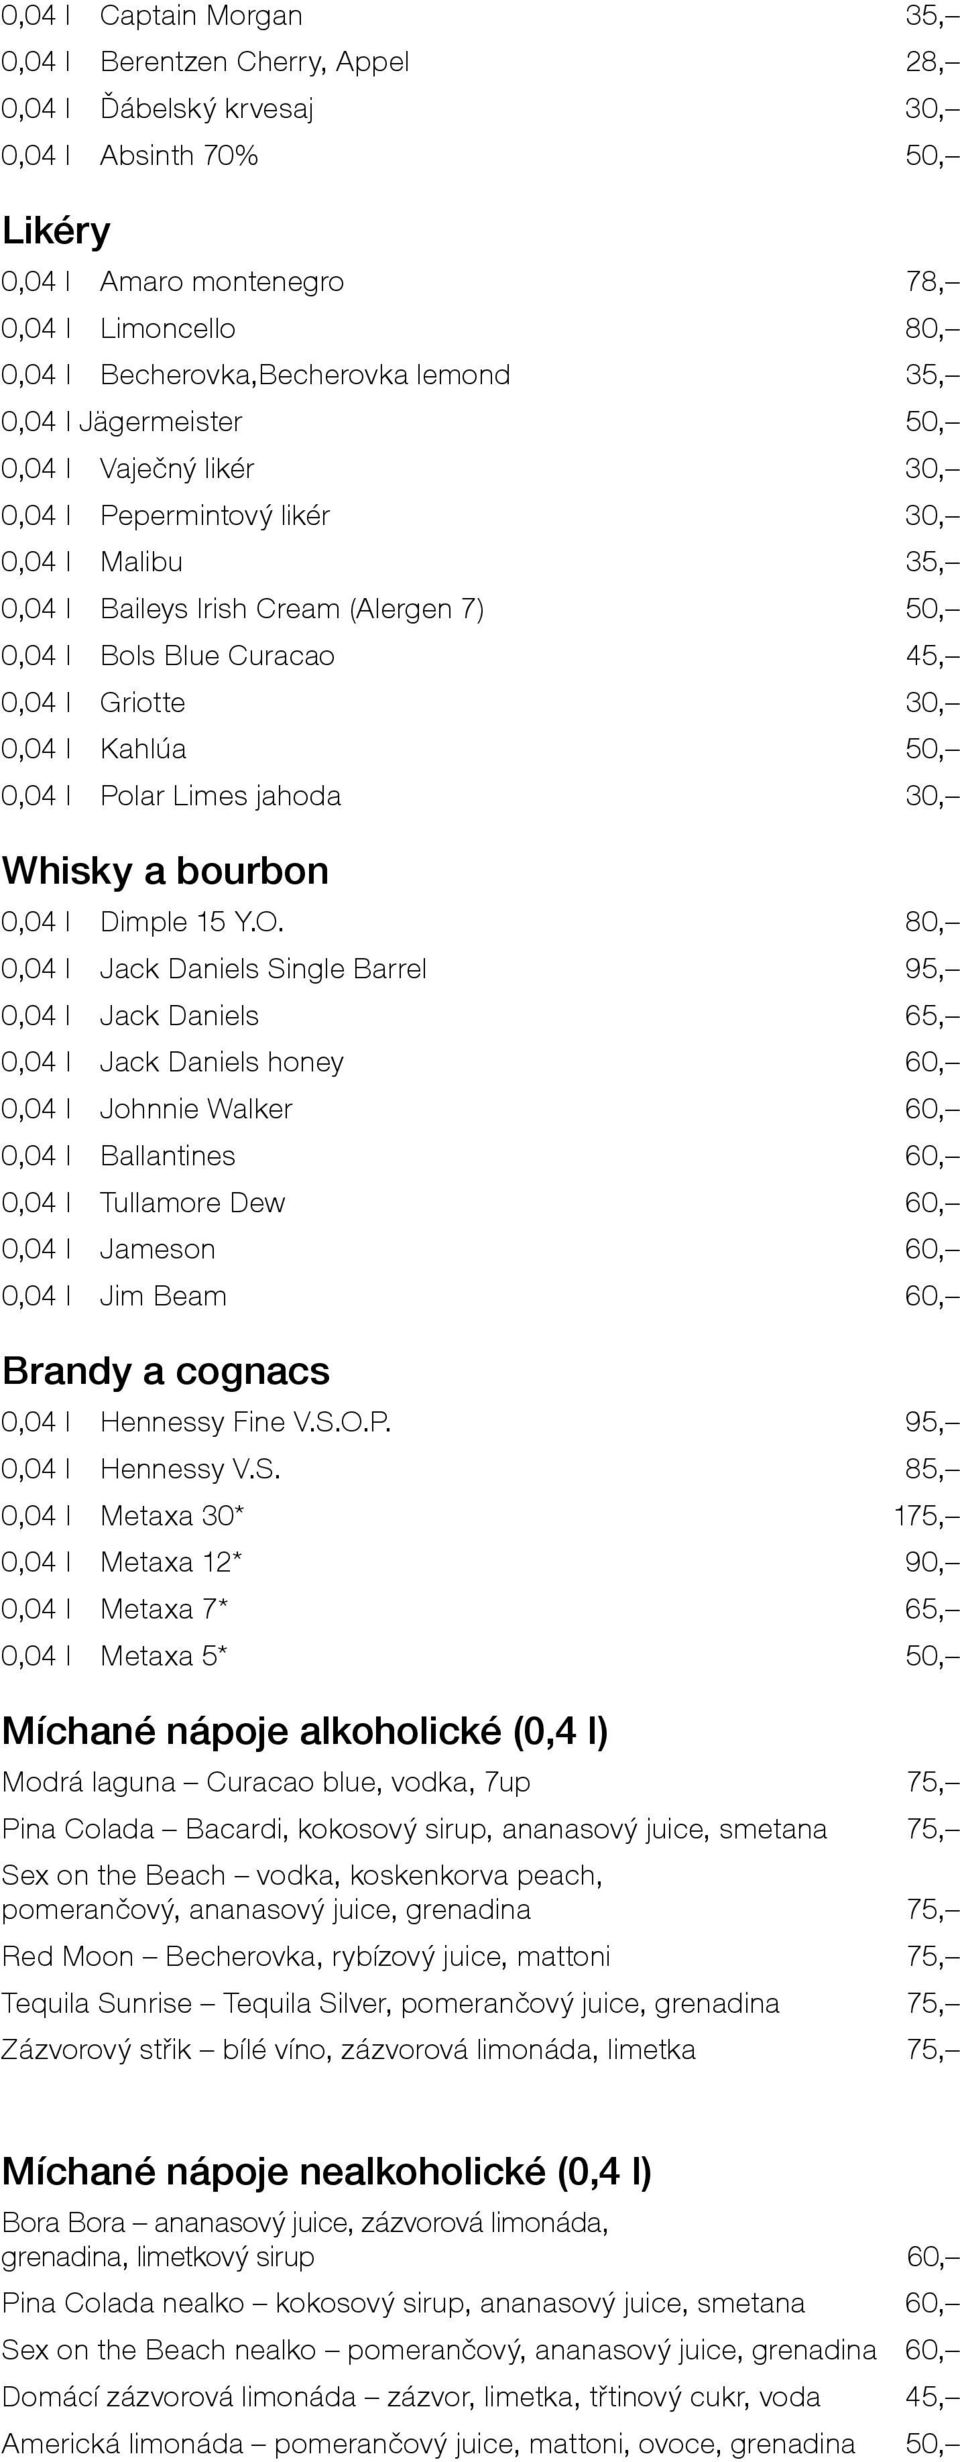 0,04 l Kahlúa 50, 0,04 l Polar Limes jahoda 30, Whisky a bourbon 0,04 l Dimple 15 Y.O.